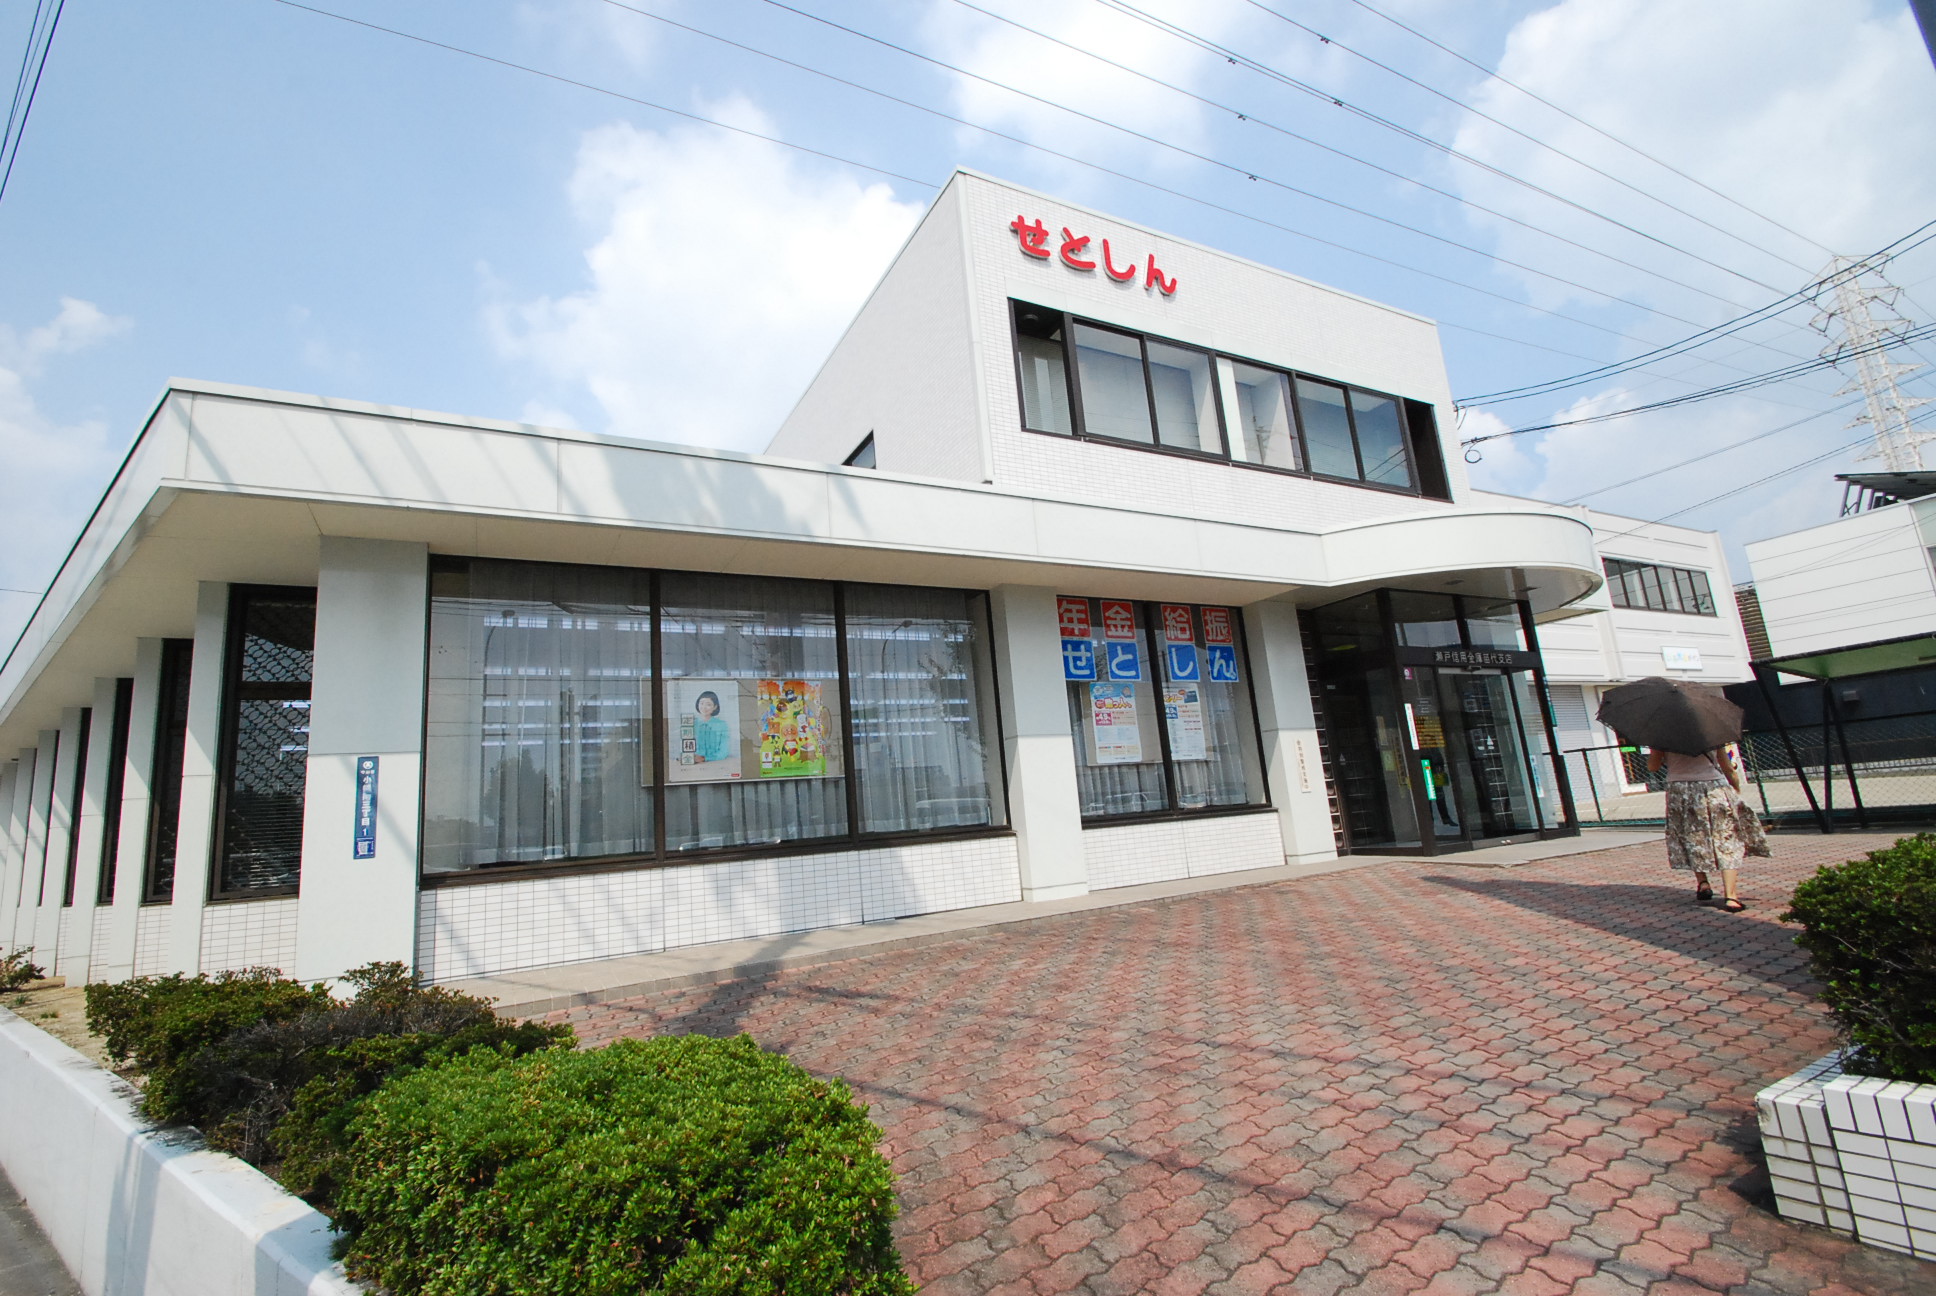 Bank. Seto credit union nursery 577m to the branch (Bank)